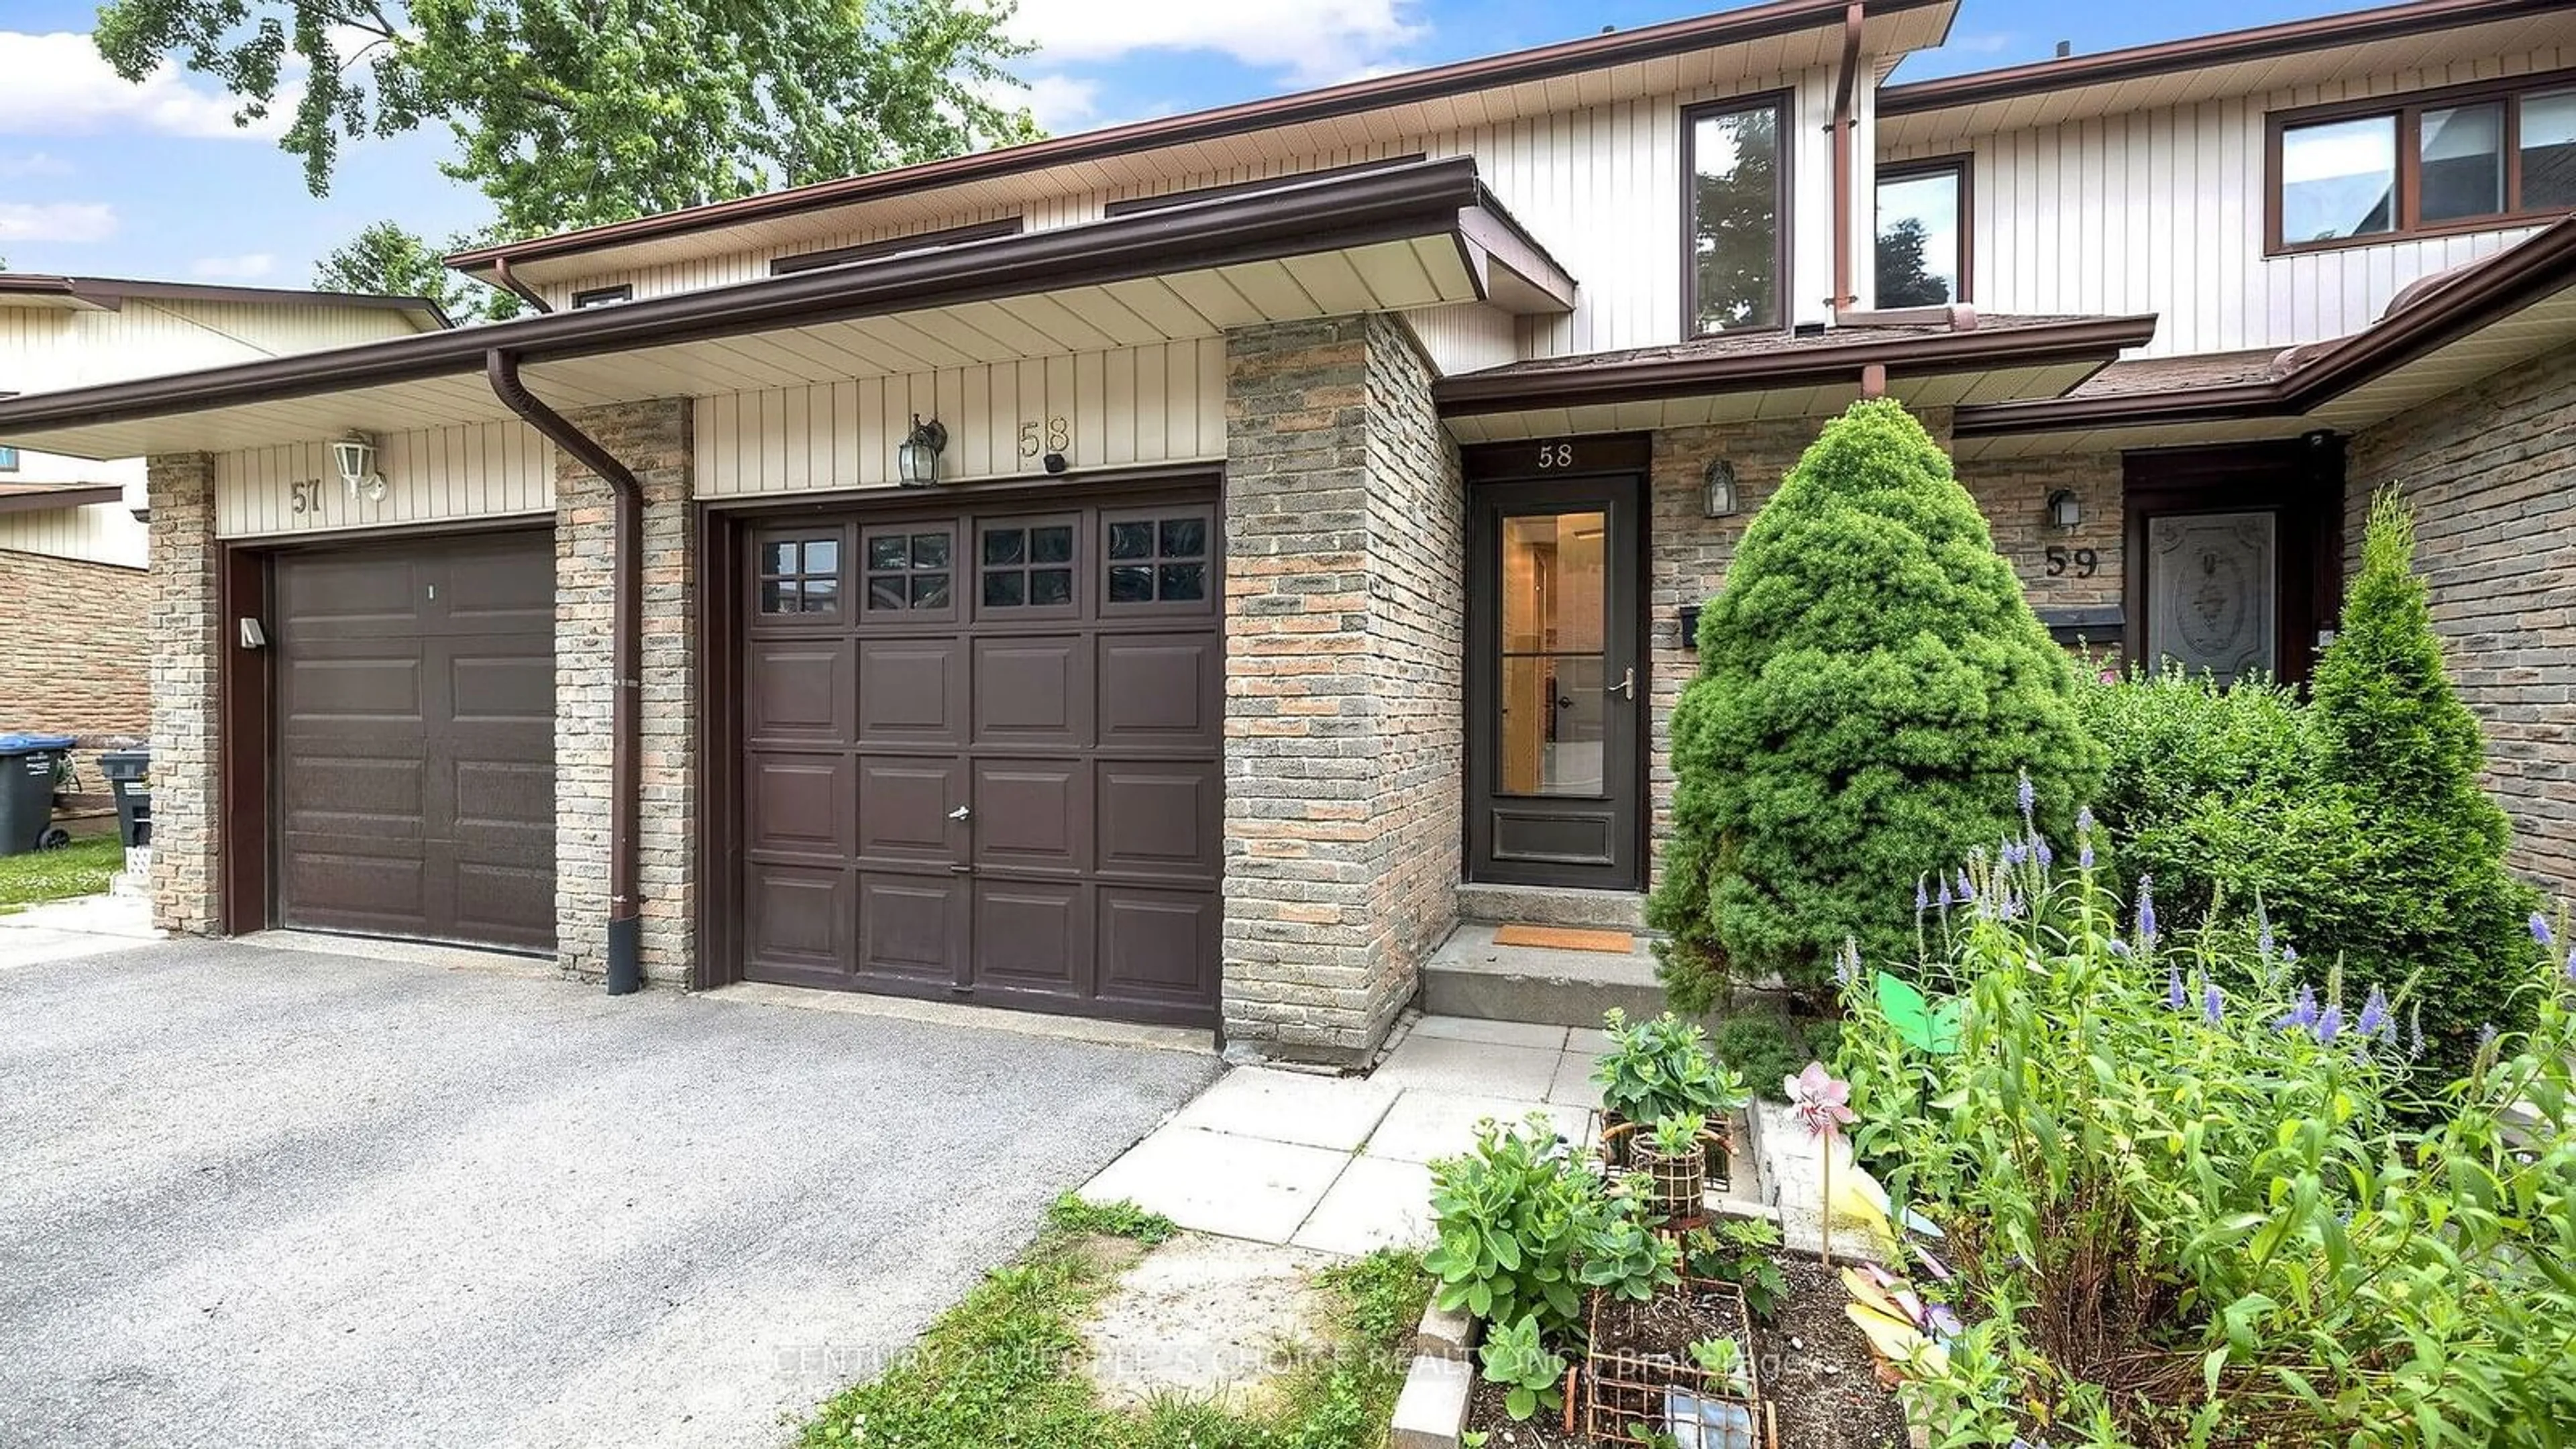 Home with brick exterior material for 58 Dawson Cres, Brampton Ontario L6V 3M5